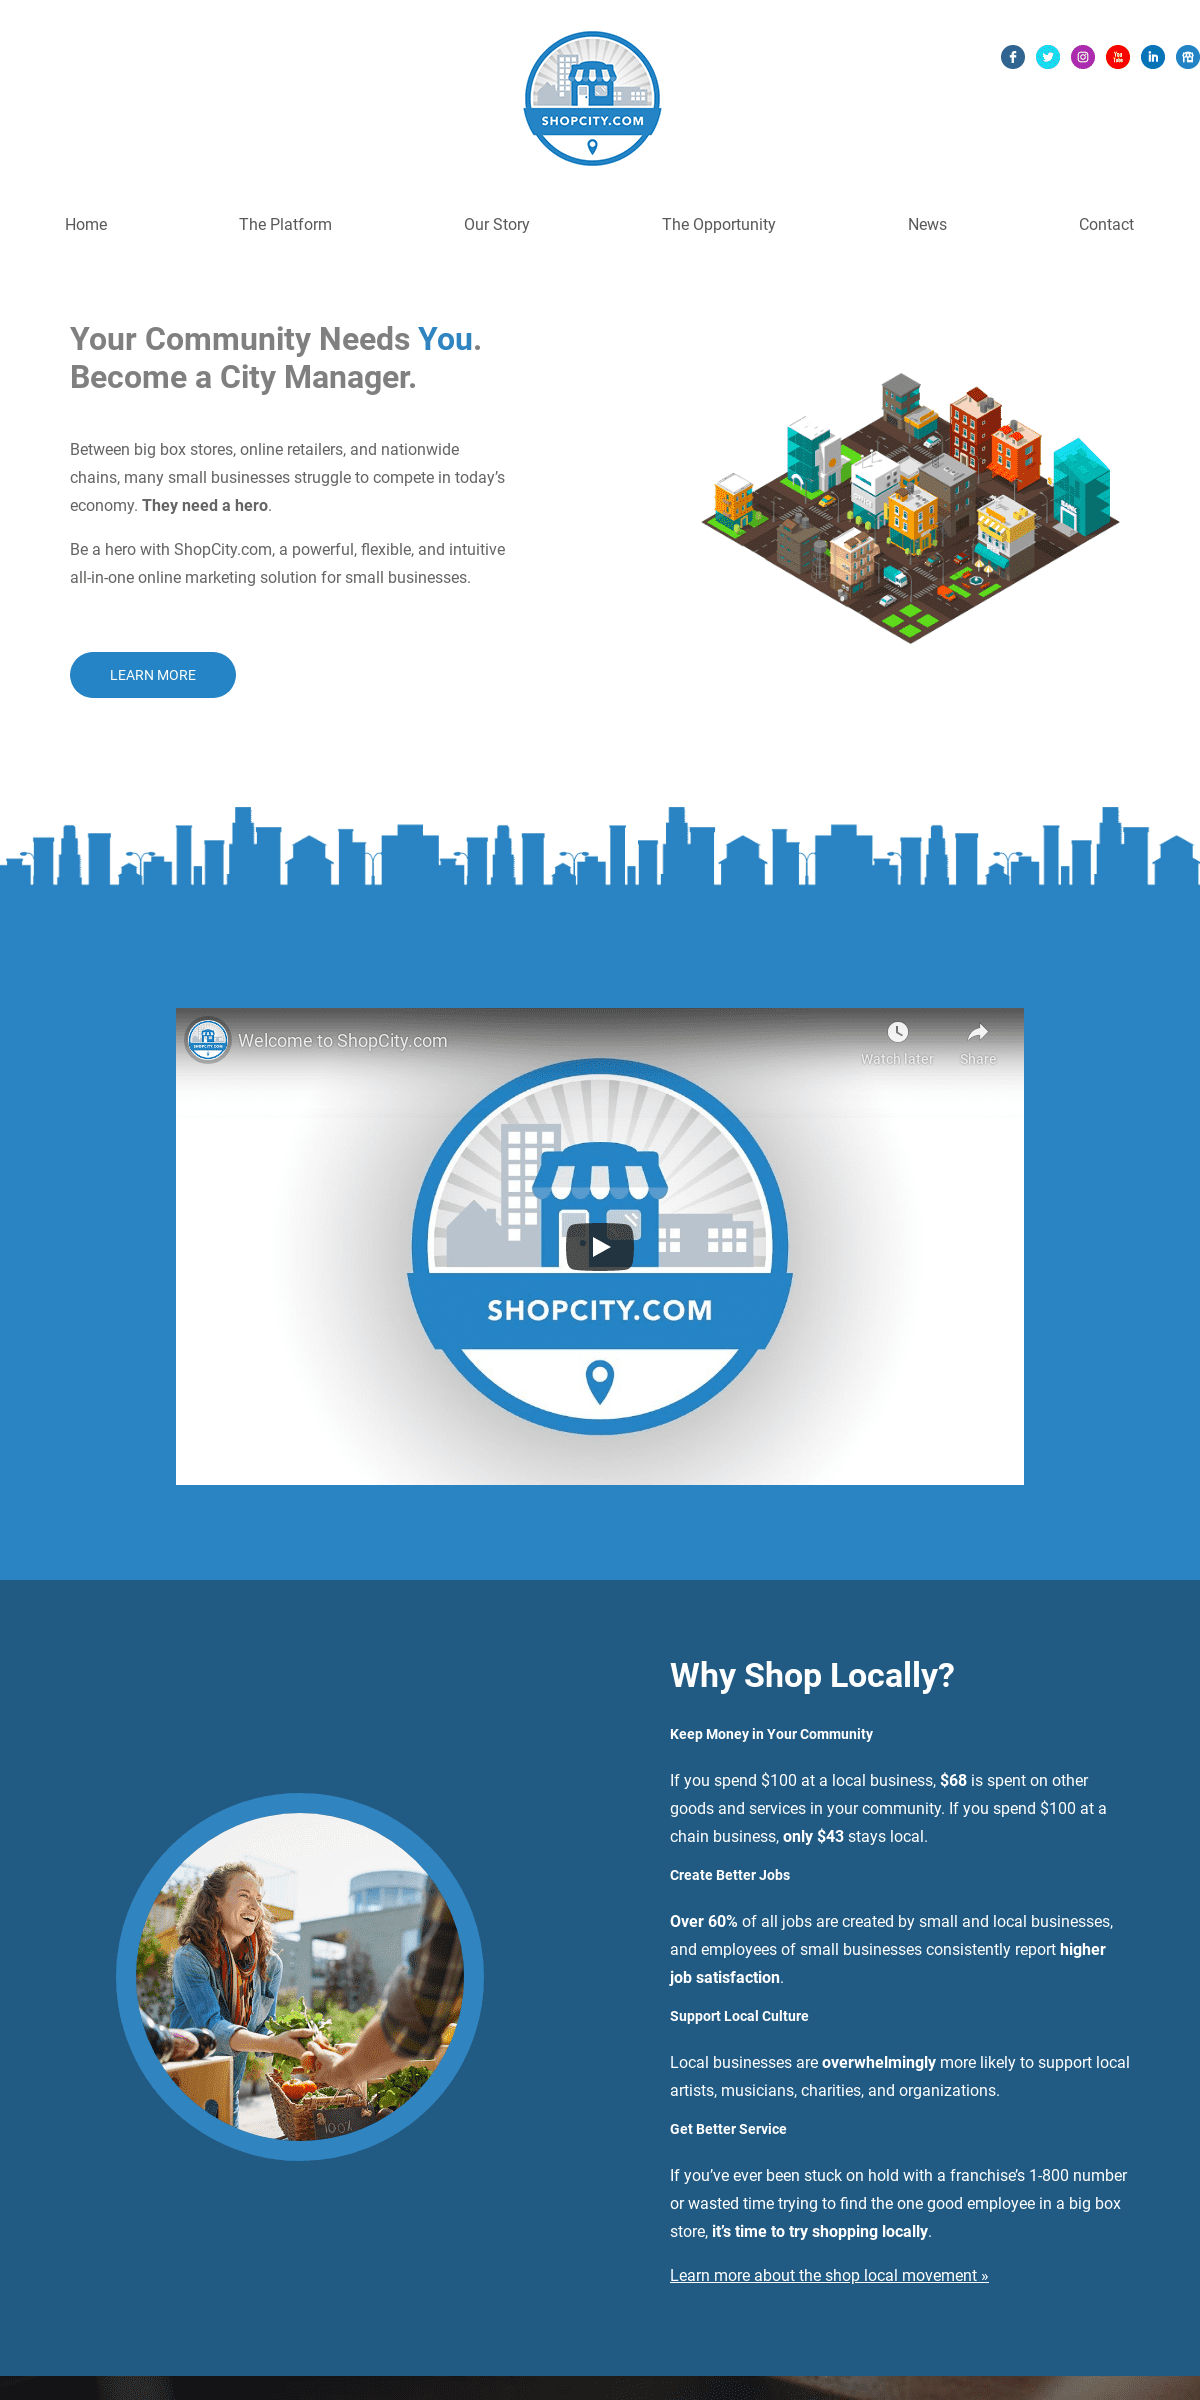 A complete backup of shopcity.com